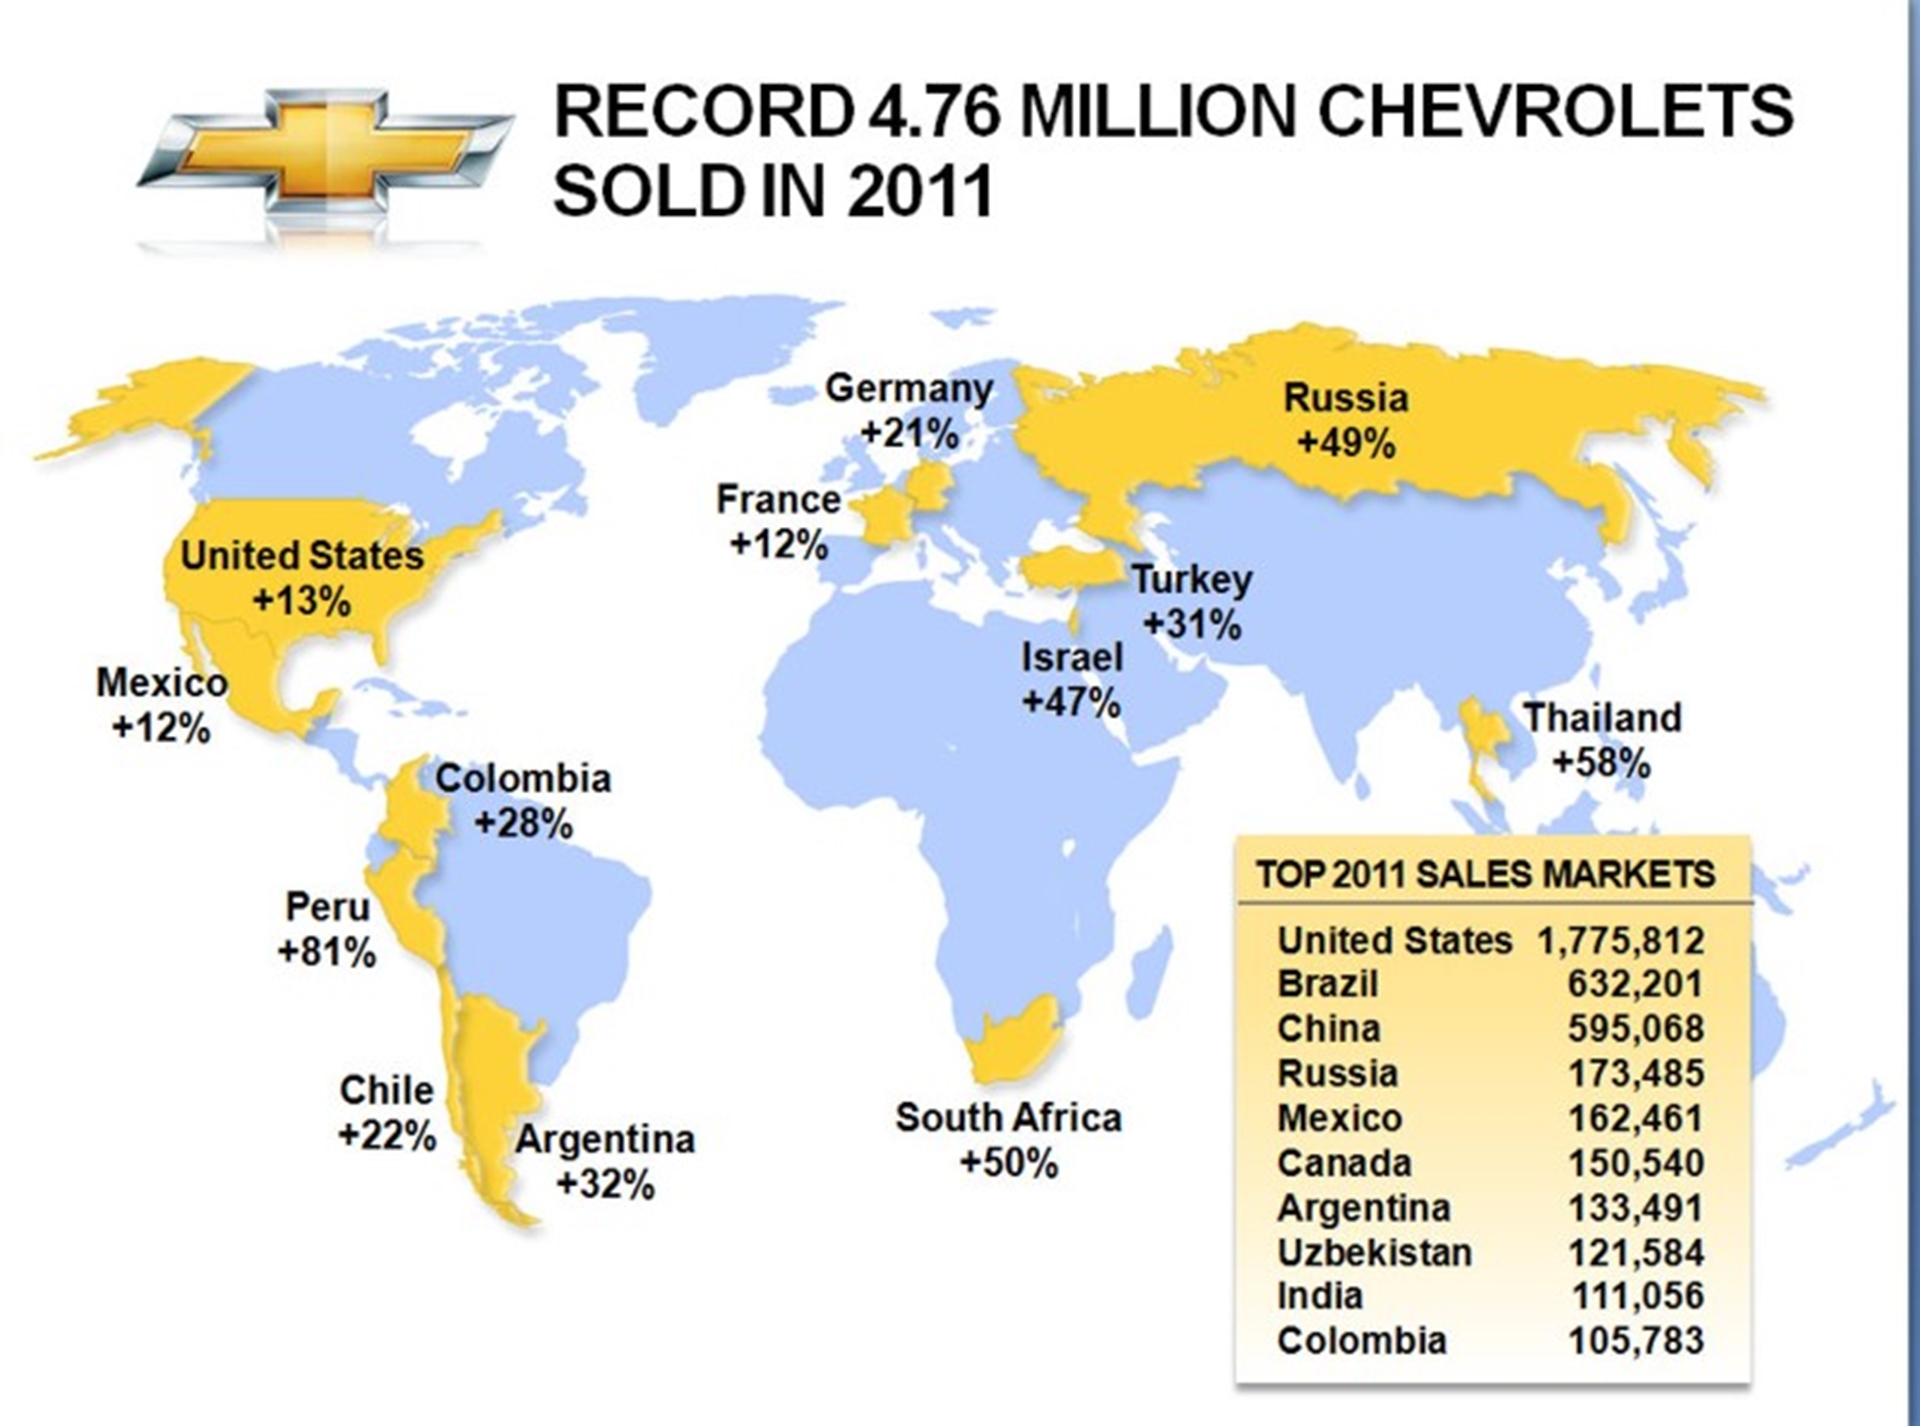 CHEVROLET ACHIEVES BEST-EVER GLOBAL SALES IN 2011